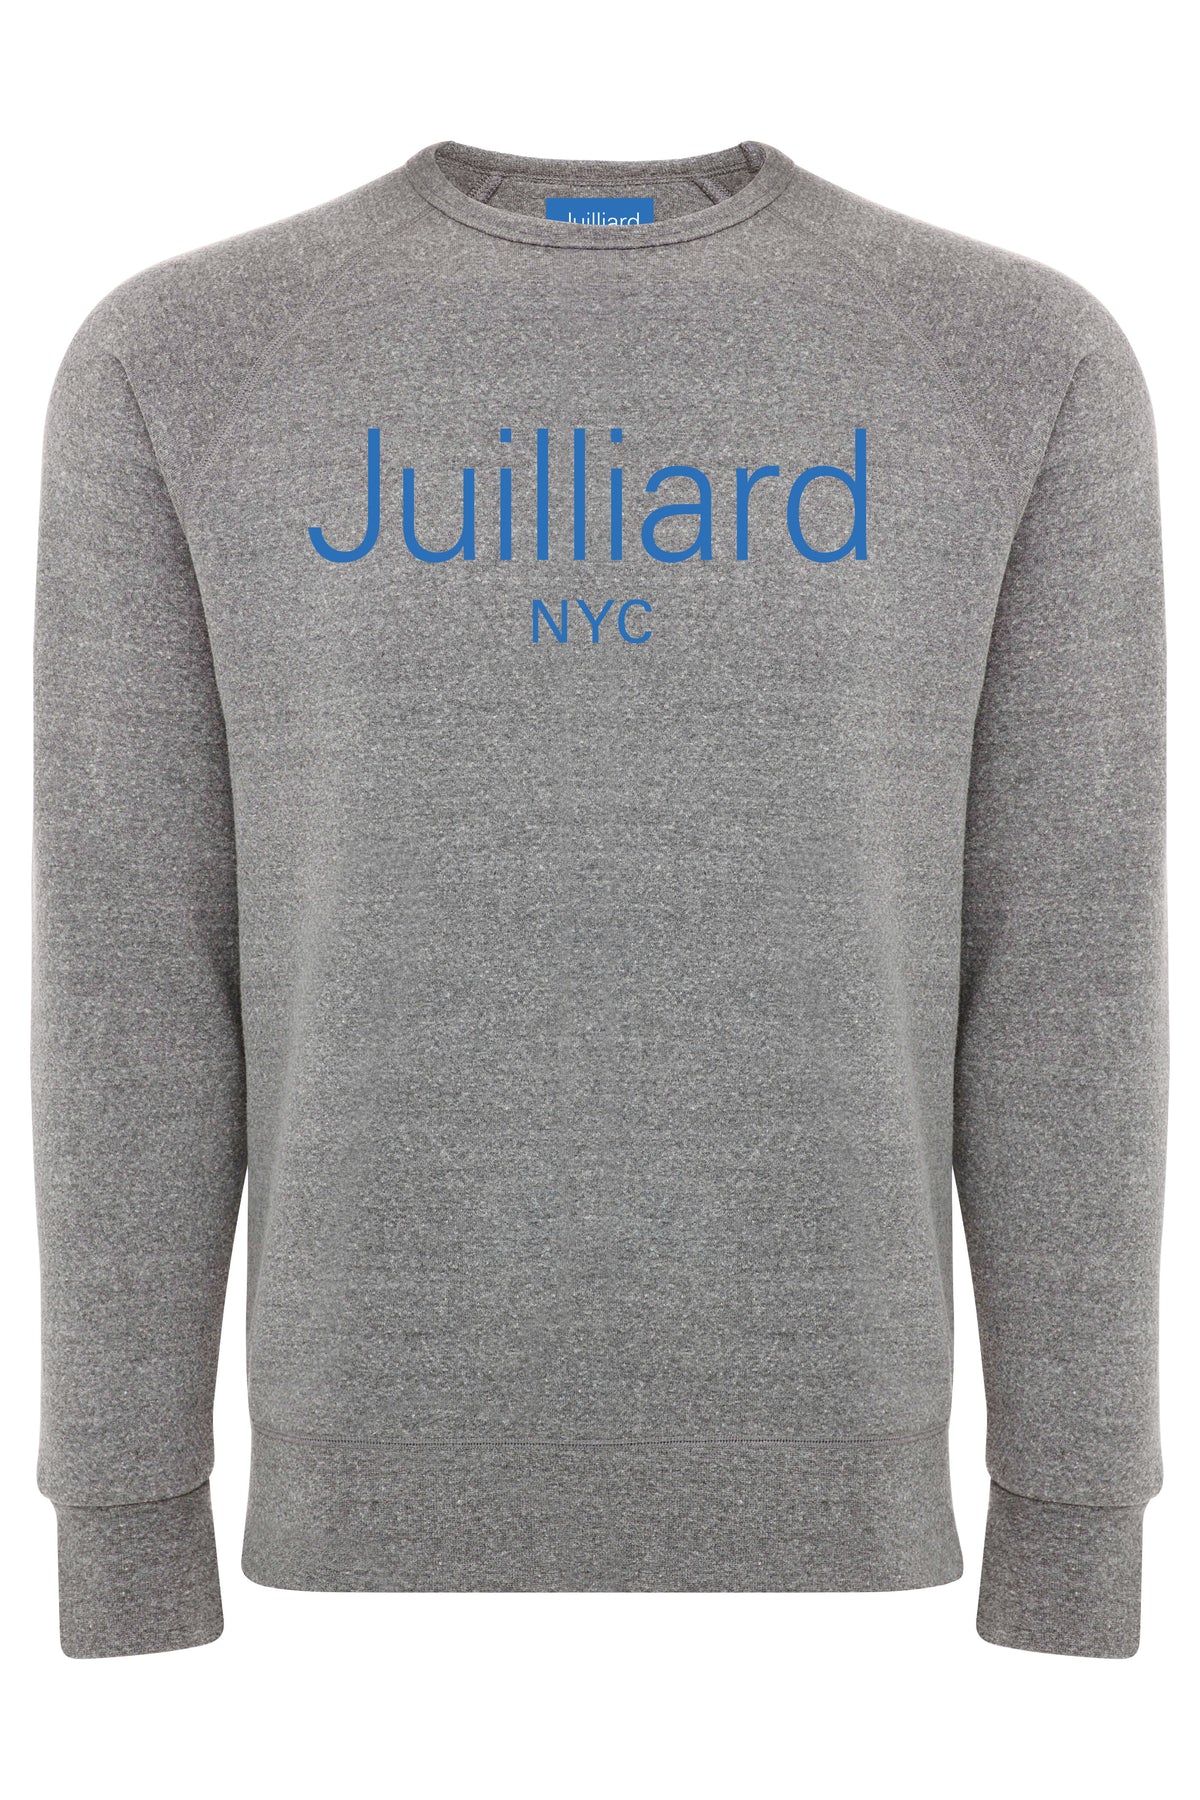 Sweatshirt: Juilliard NYC Crewneck FINAL SALE CLEARANCE